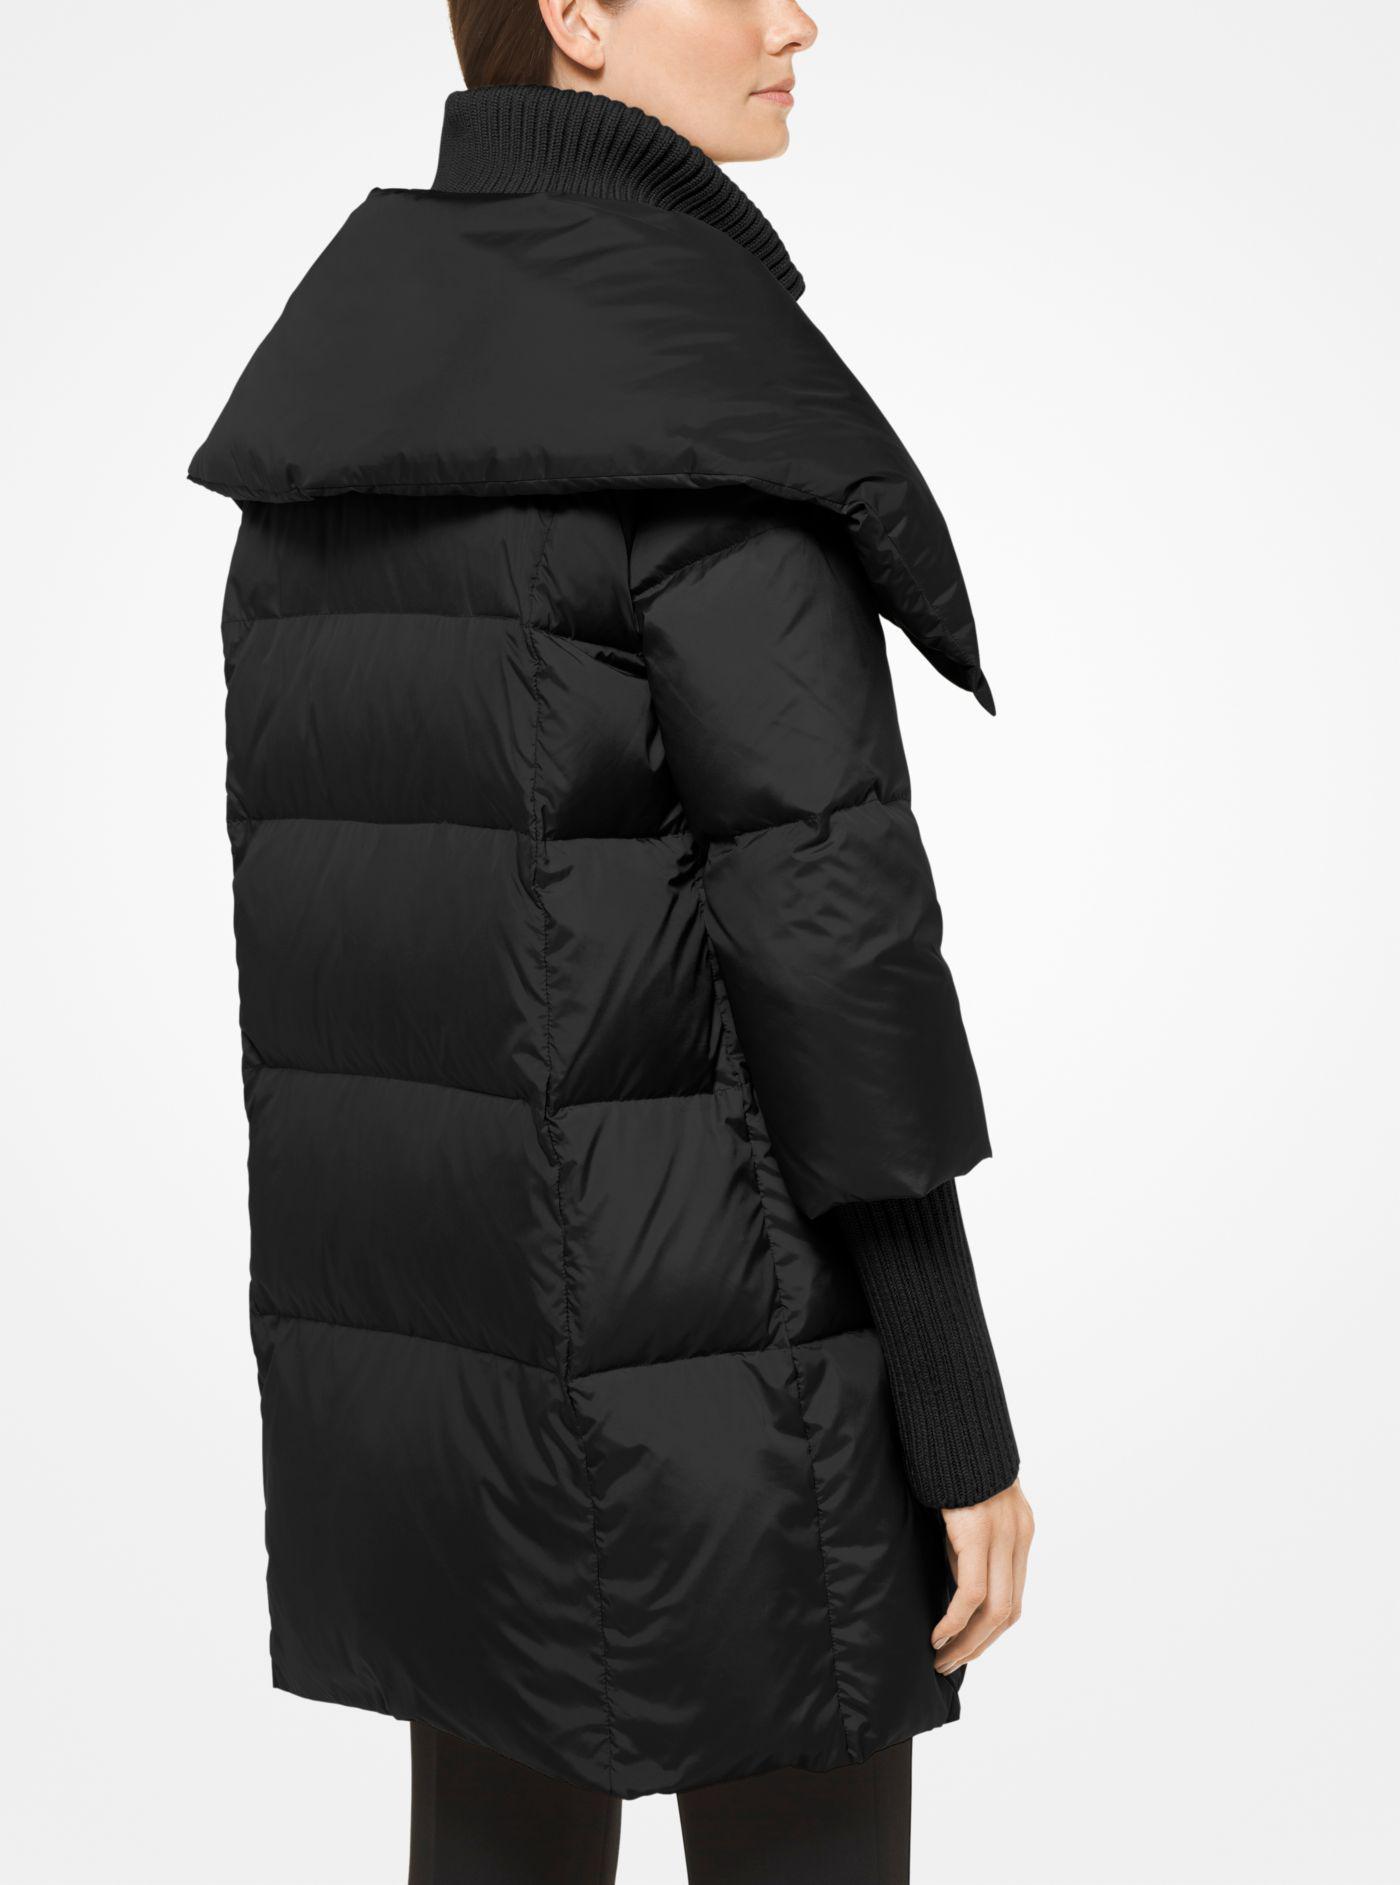 michael kors nylon oversized puffer jacket